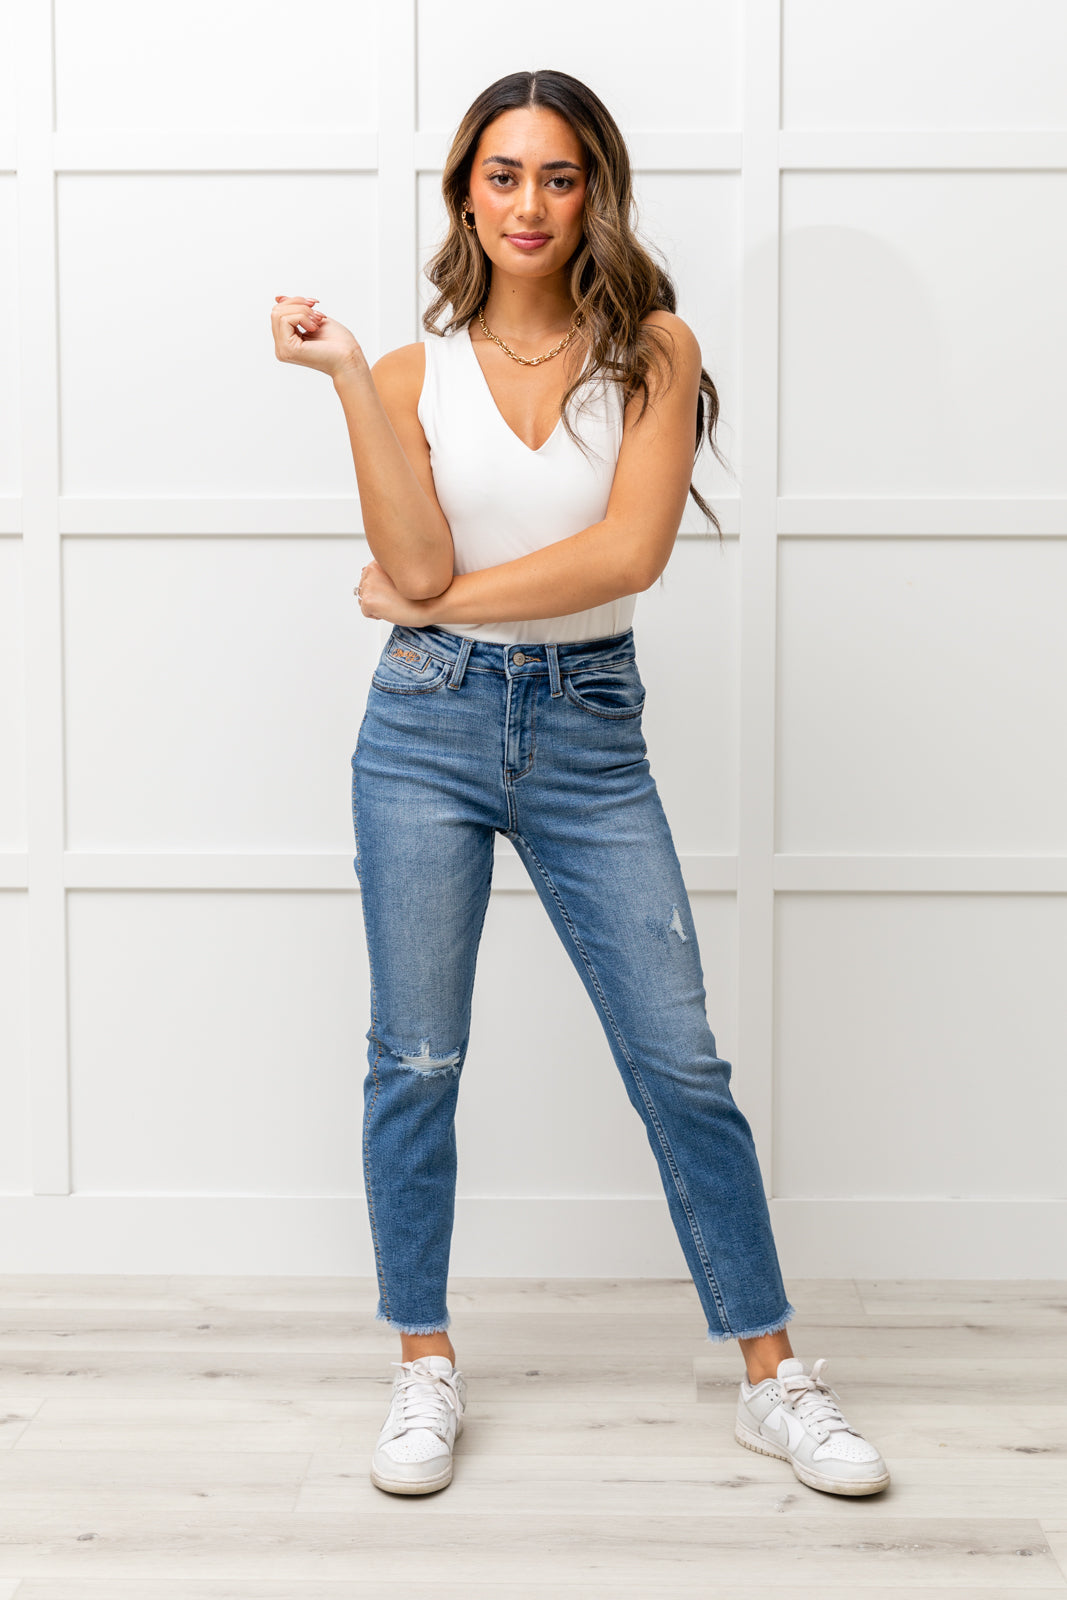 Judy Blue Howdy Embroidery Boyfriend Jeans-Jeans-Krush Kandy, Women's Online Fashion Boutique Located in Phoenix, Arizona (Scottsdale Area)